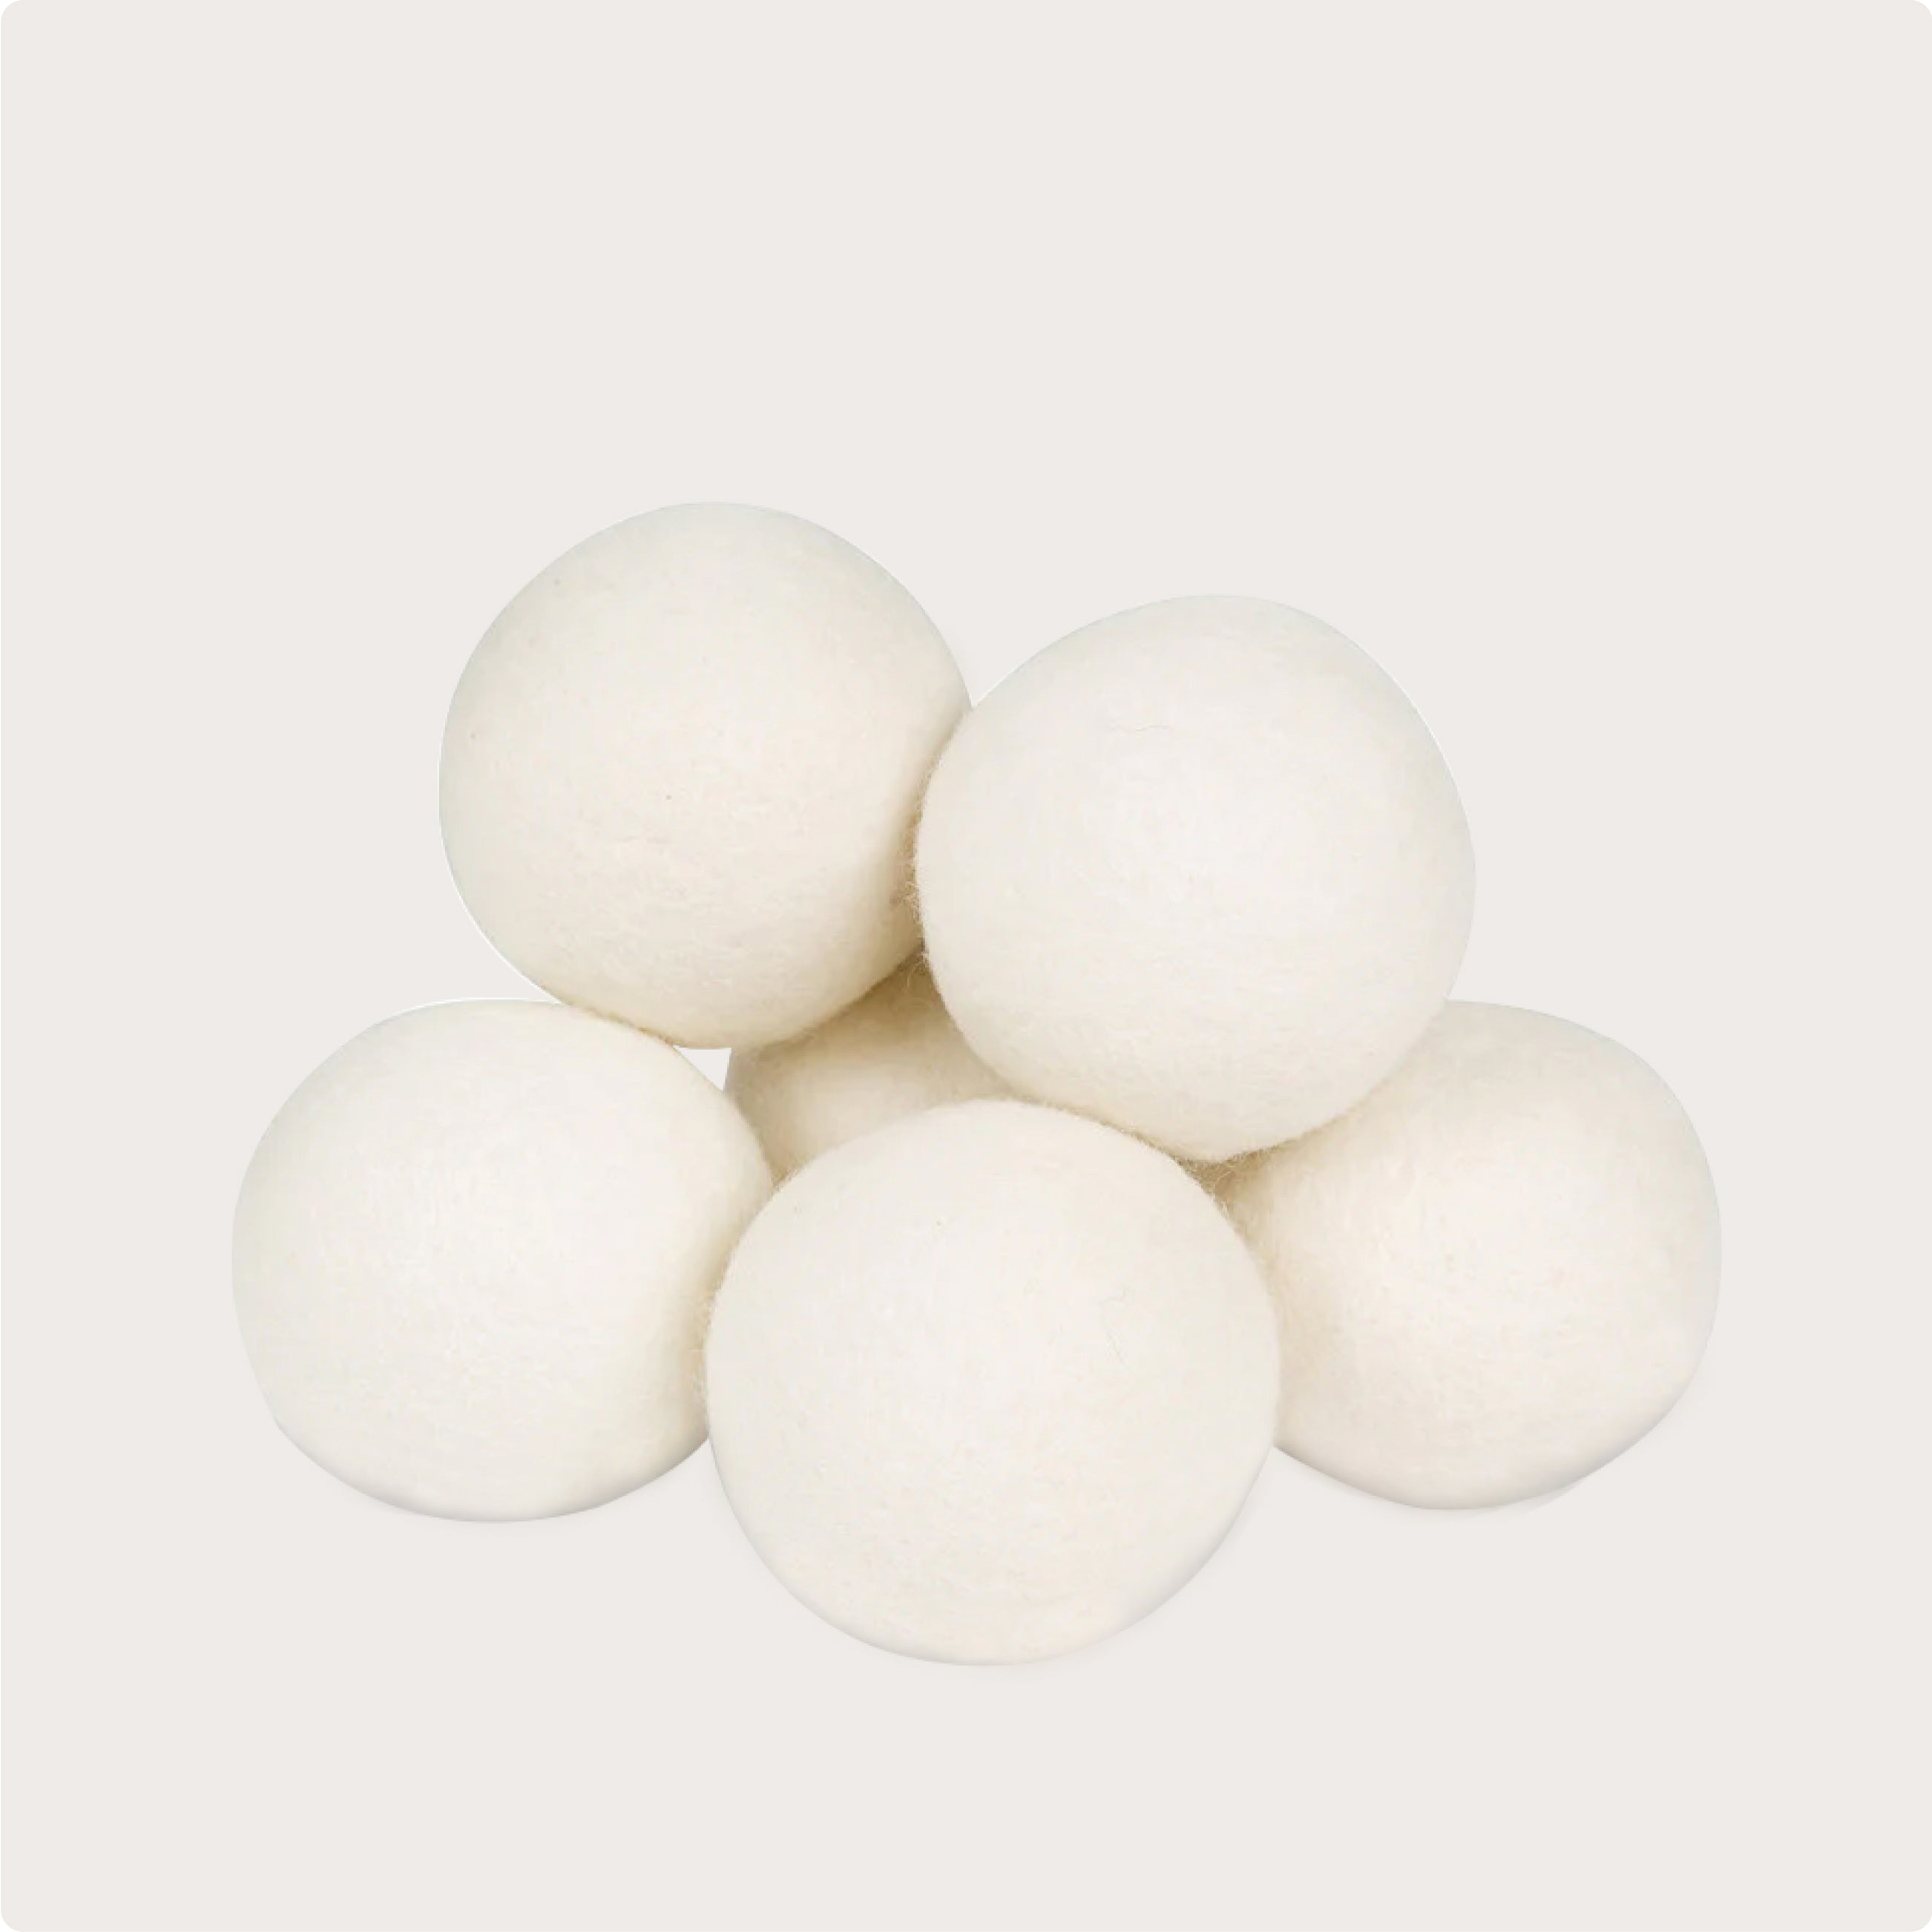 Wool Dryer Balls - Natural Eco Fabric Softener - Eliminates